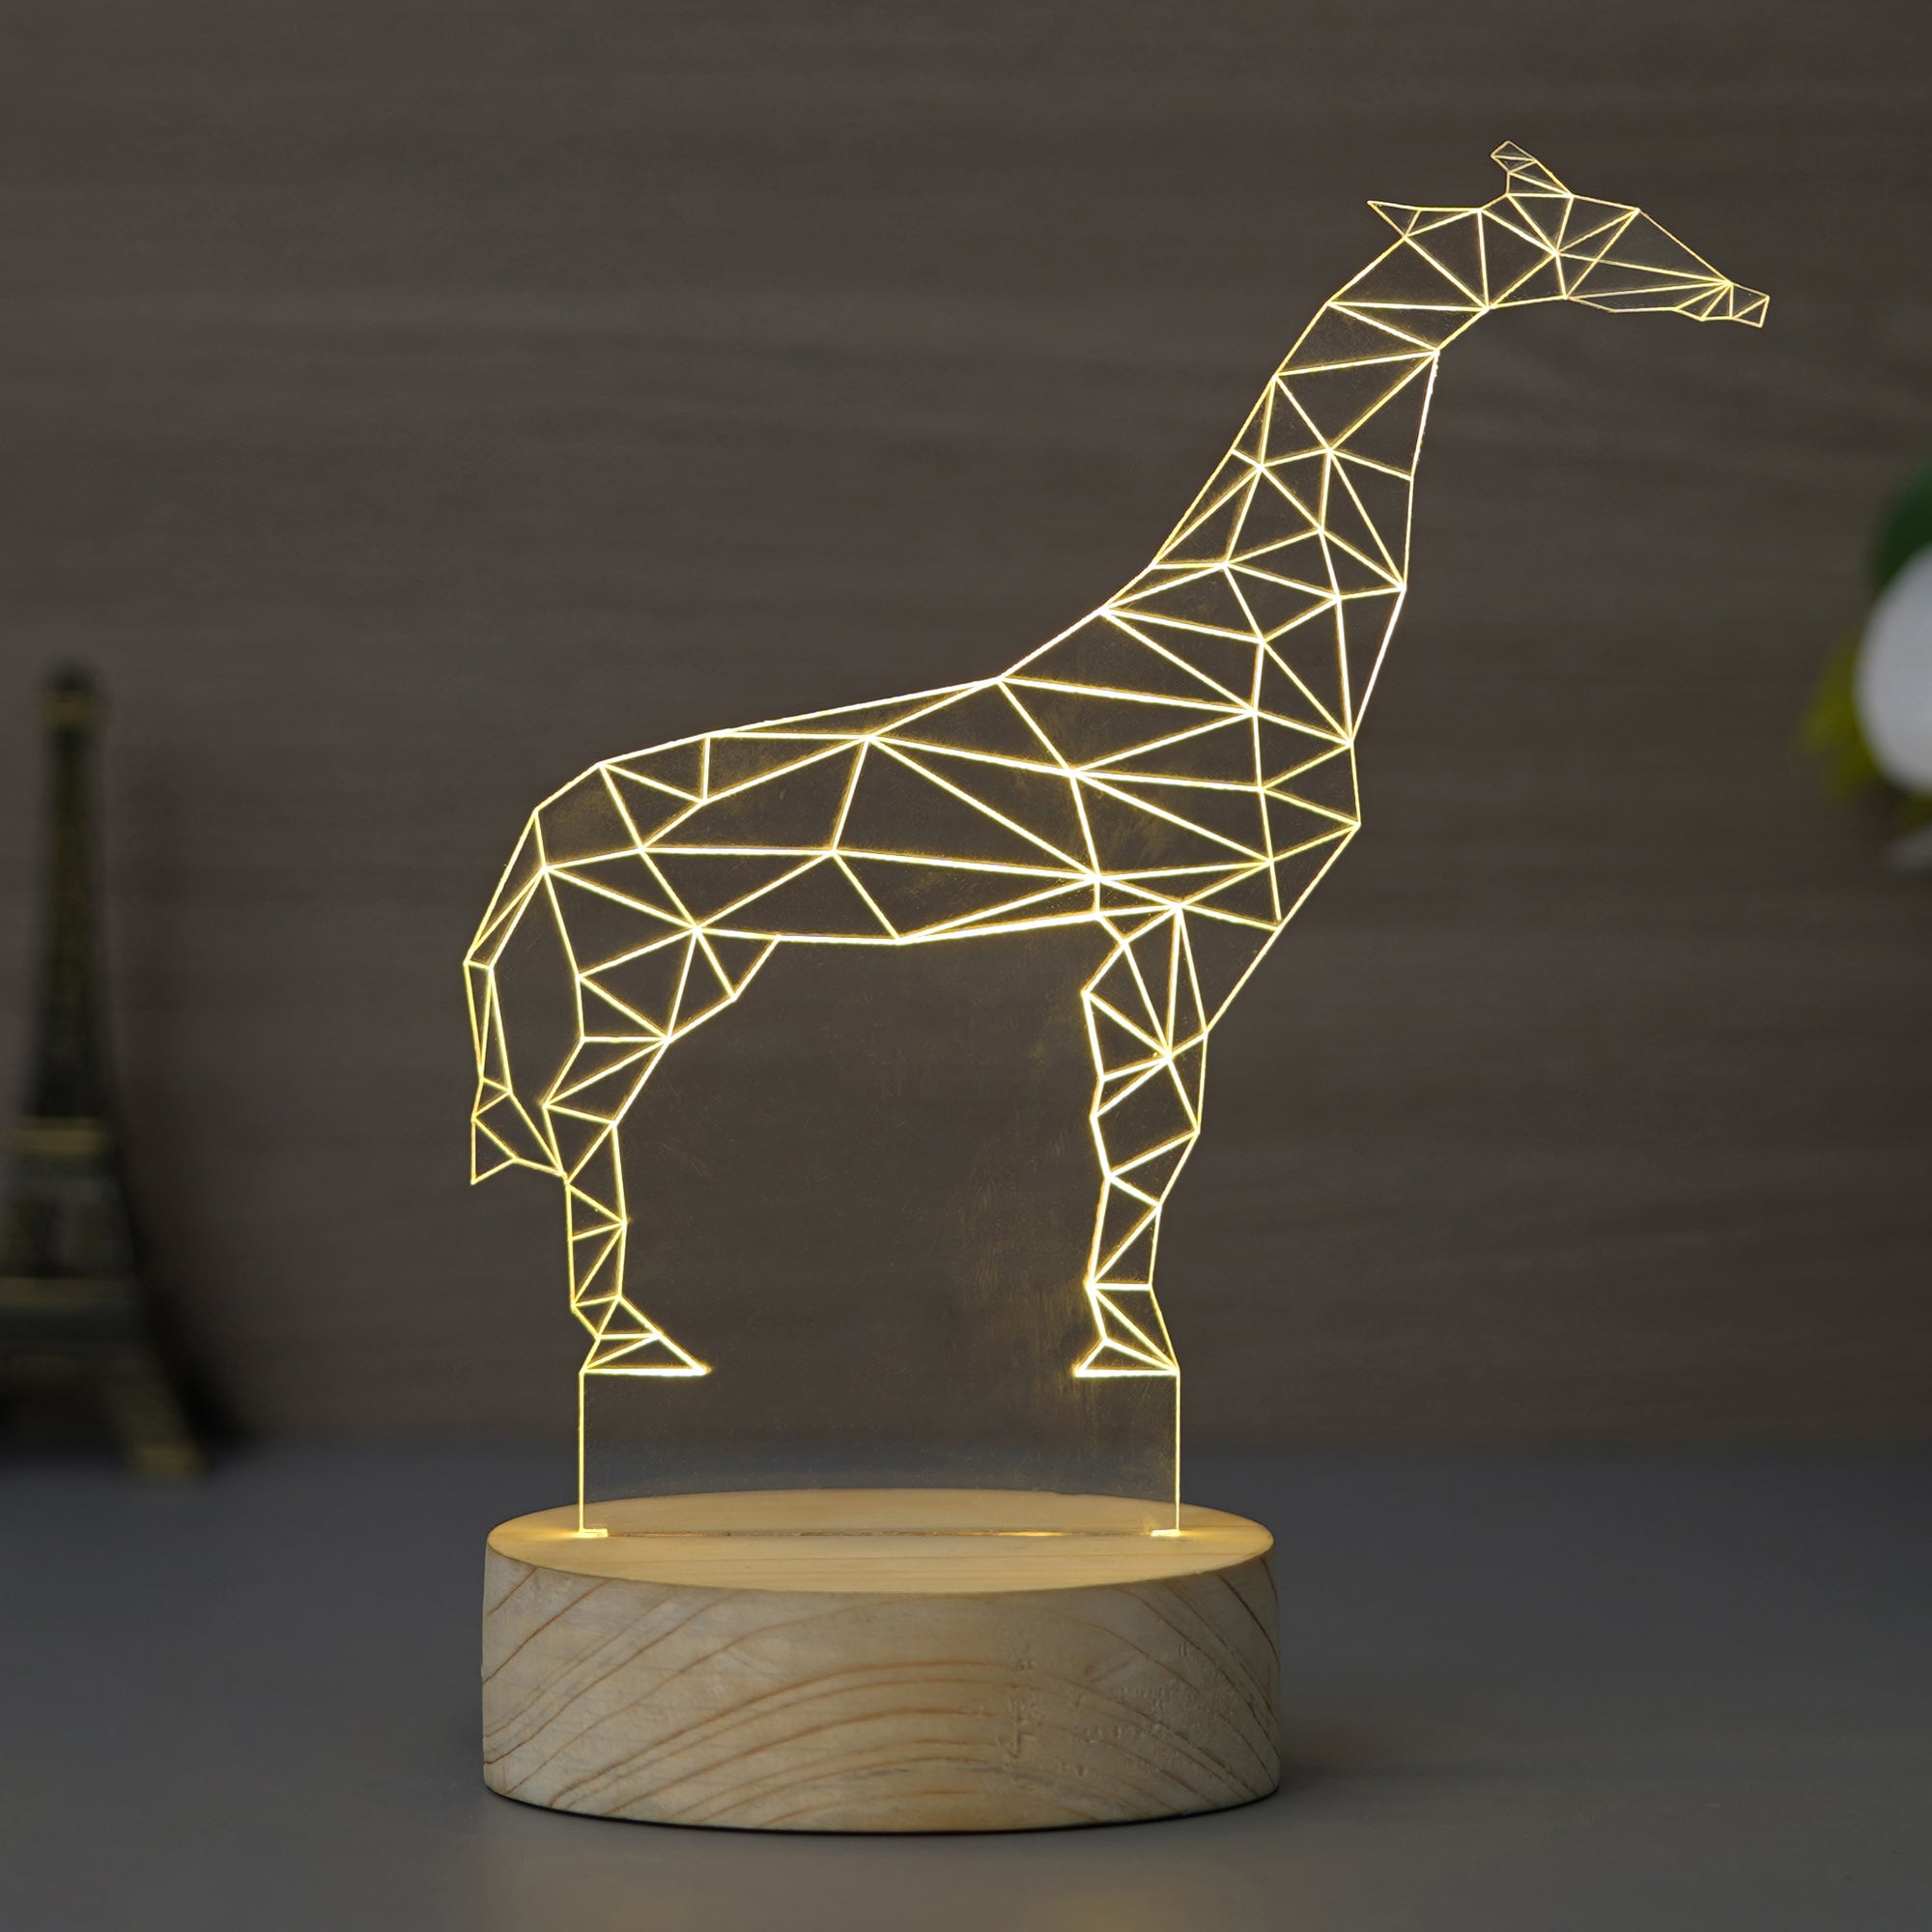 Giraffe Design Carved on Acrylic & Wood Base Night Lamp